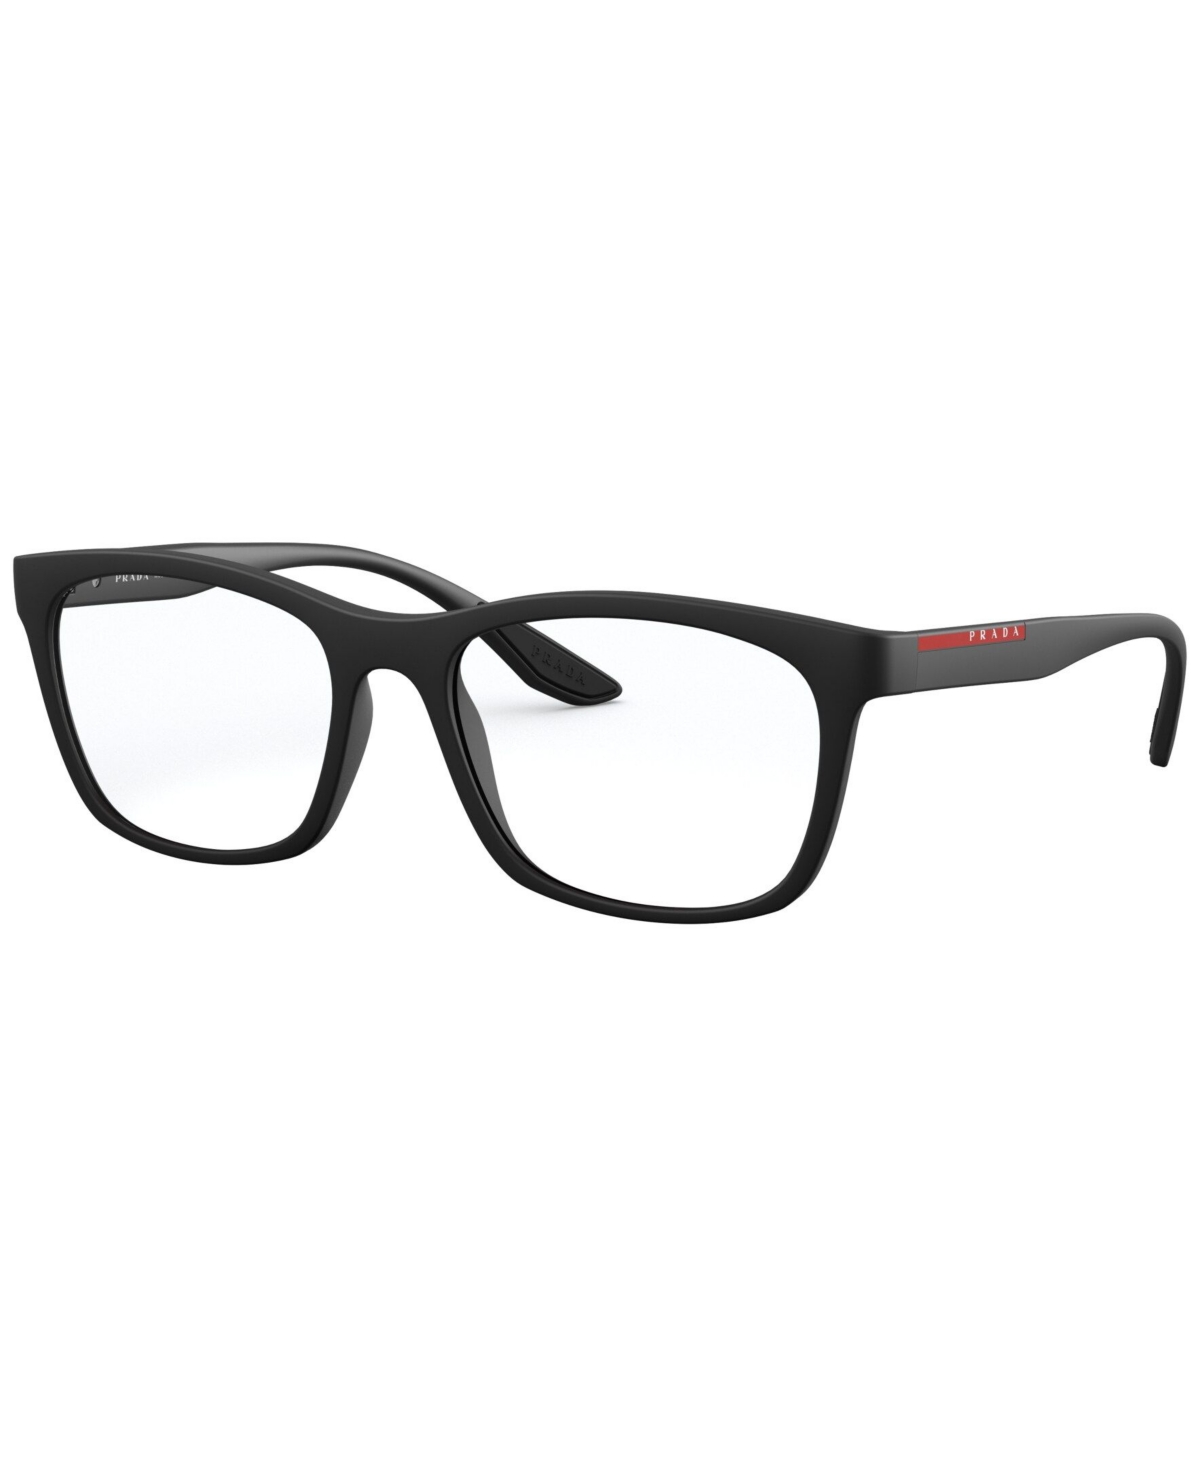 Ps 02NV Men's Square Eyeglasses - Black